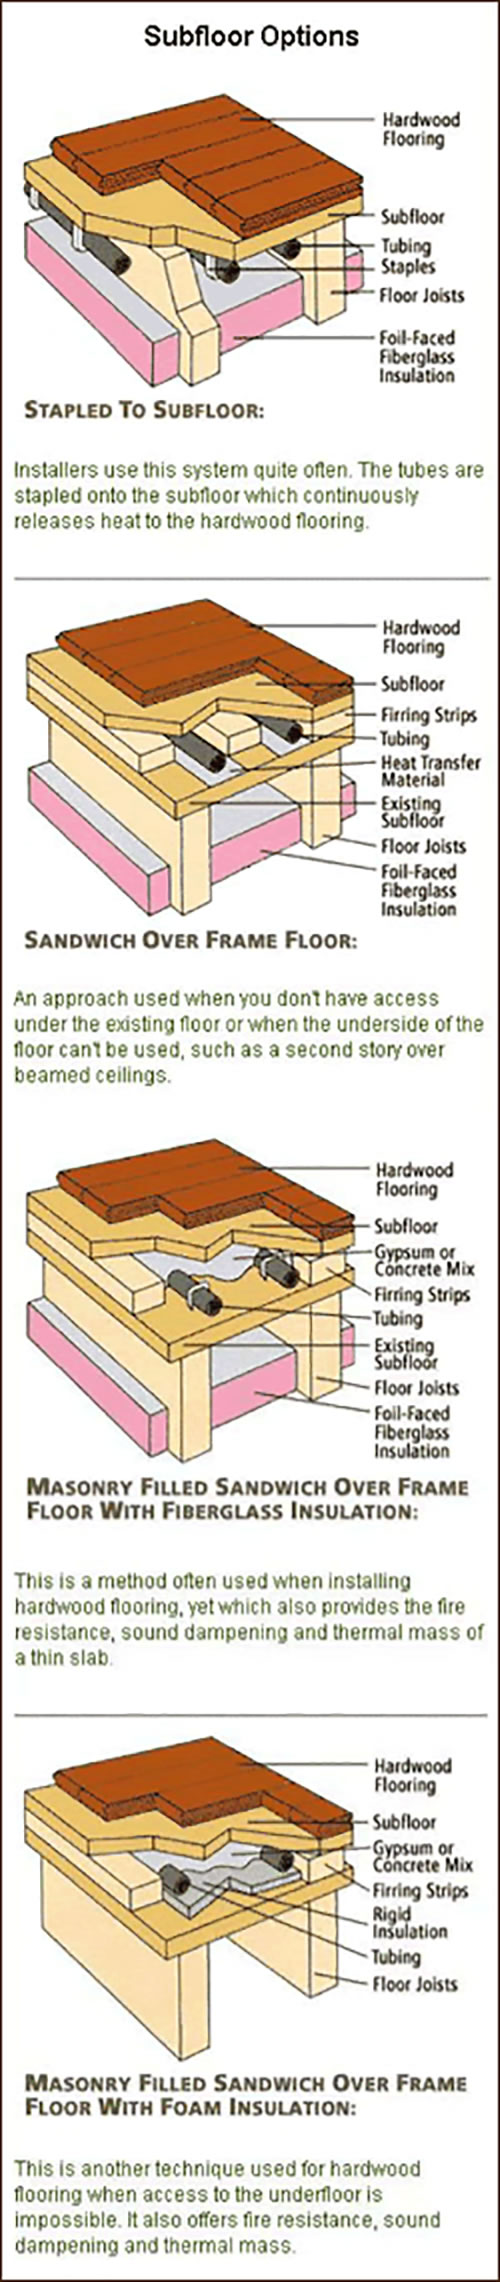 How To Install Hardwood Floors Over, How To Install Radiant Heat Under Hardwood Floors